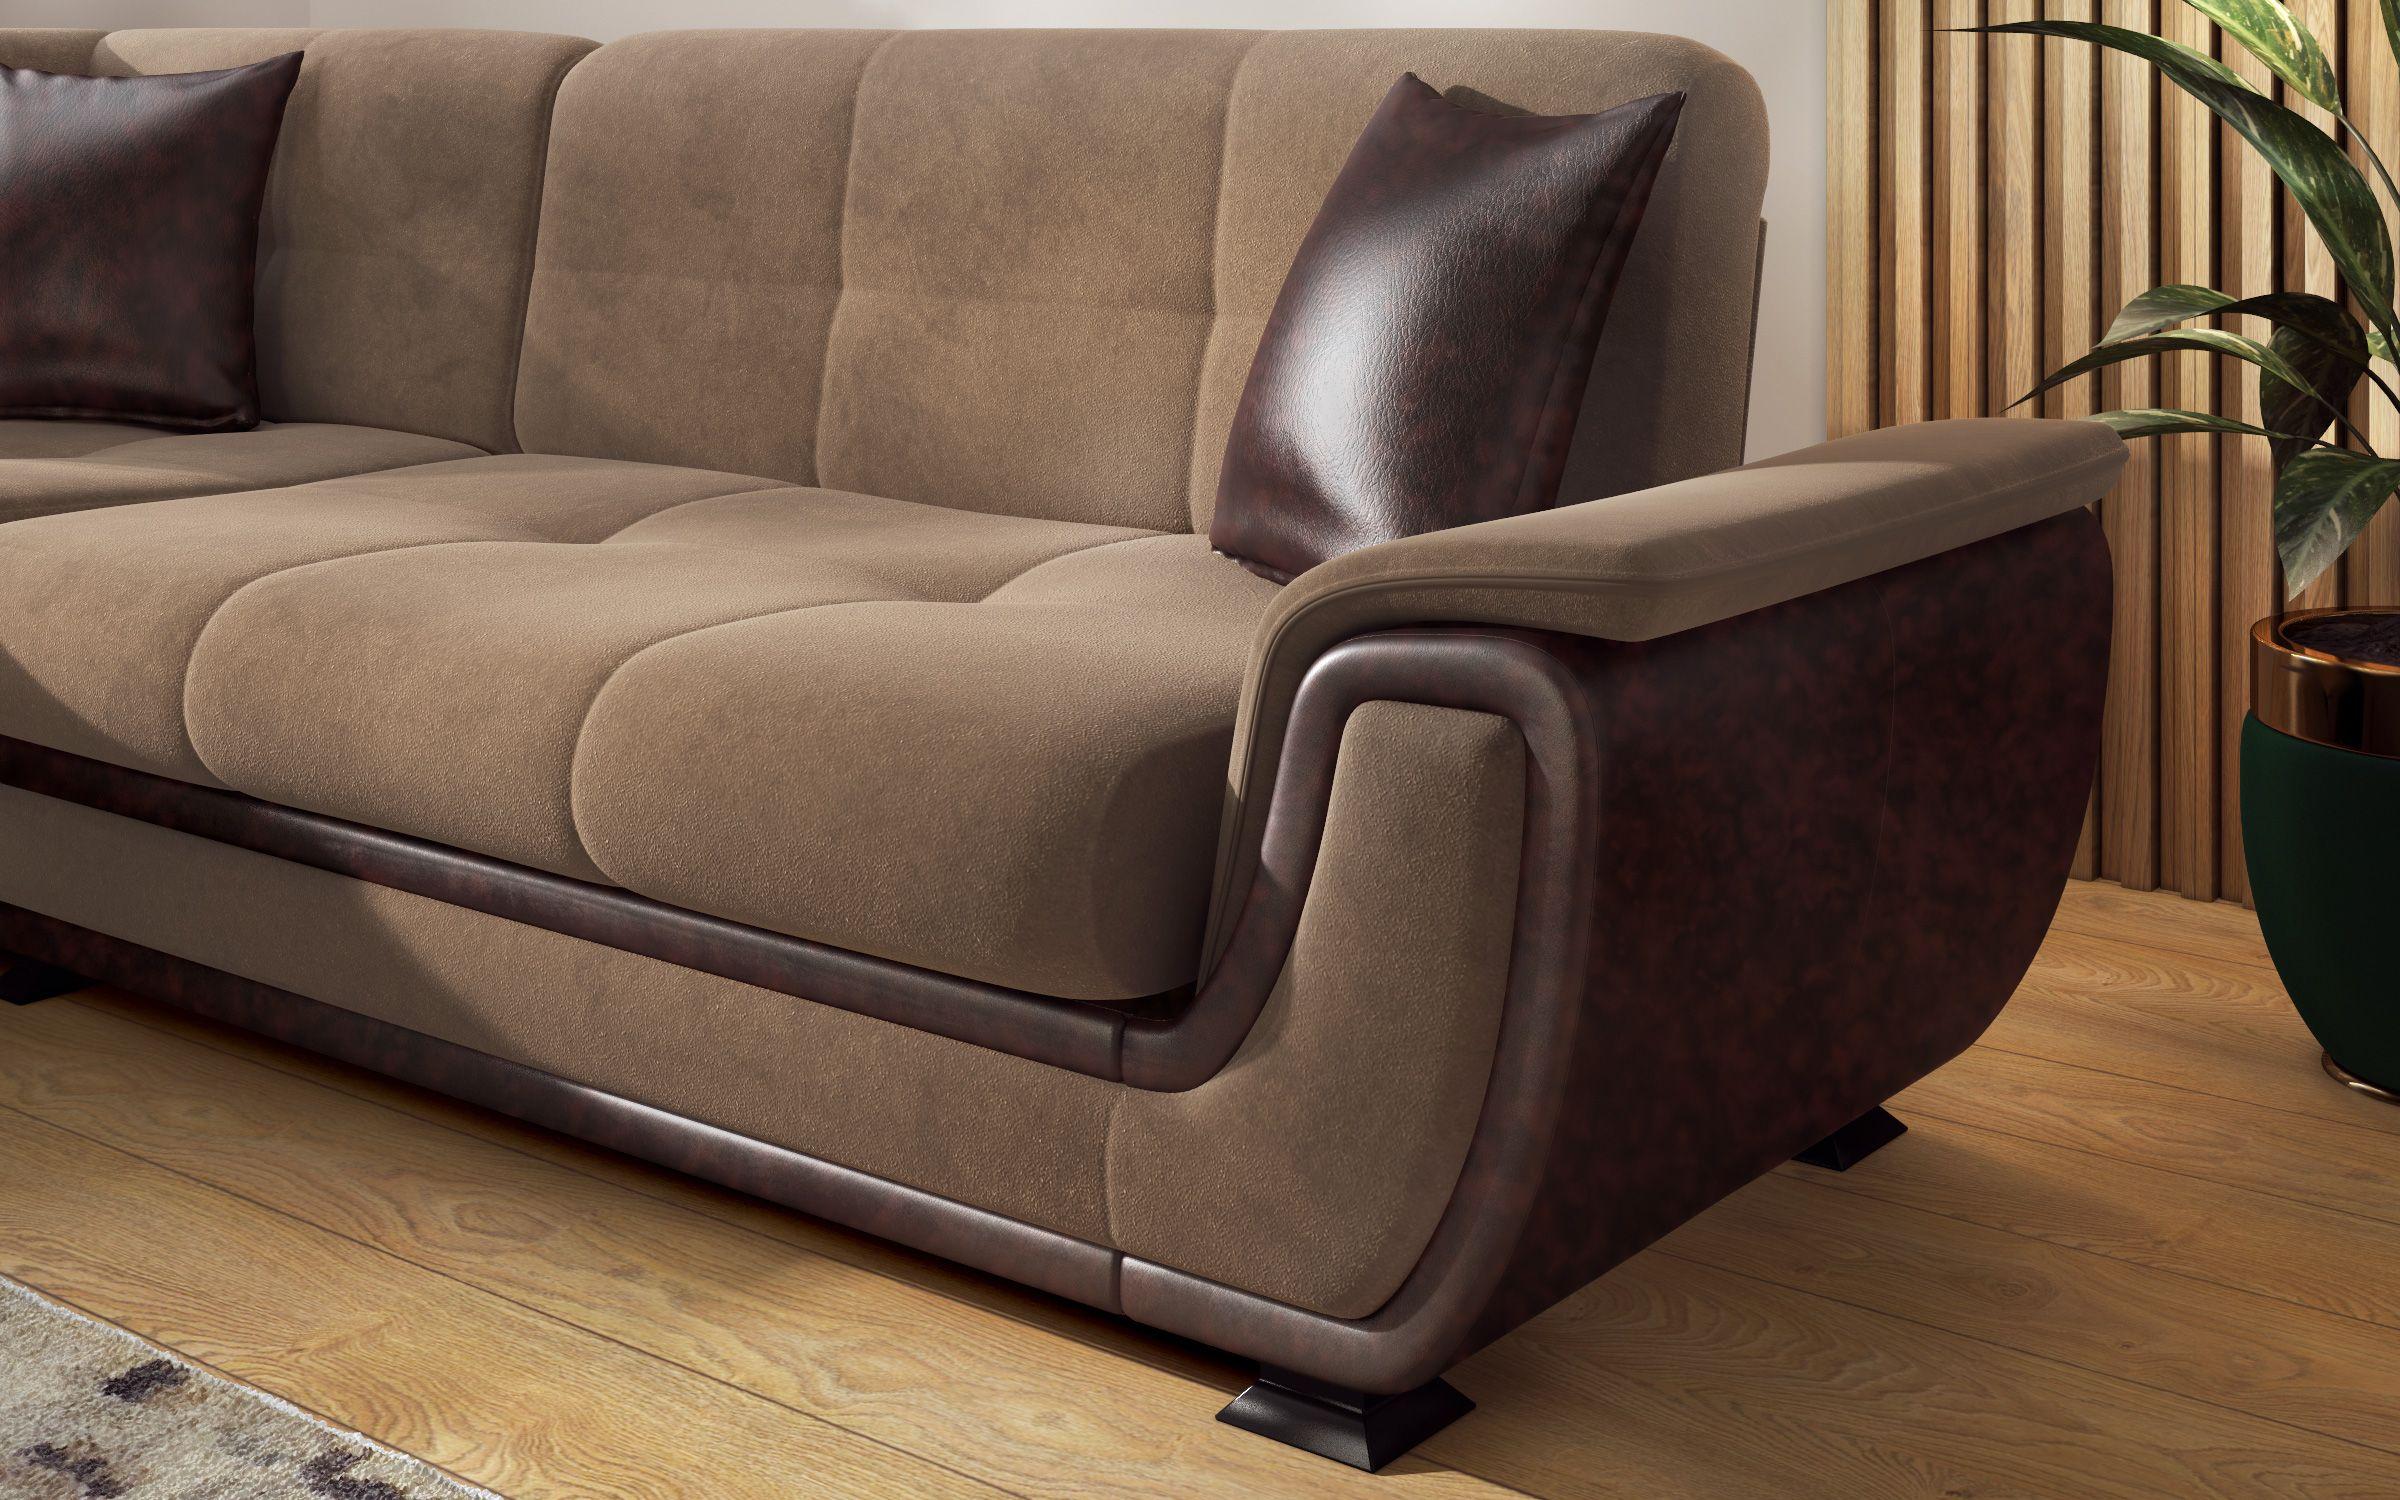 Kλικ - κλακ καναπές Princess II S + μηχανισμός, ανοιχτό καφέ + καφέ δέρμα  3